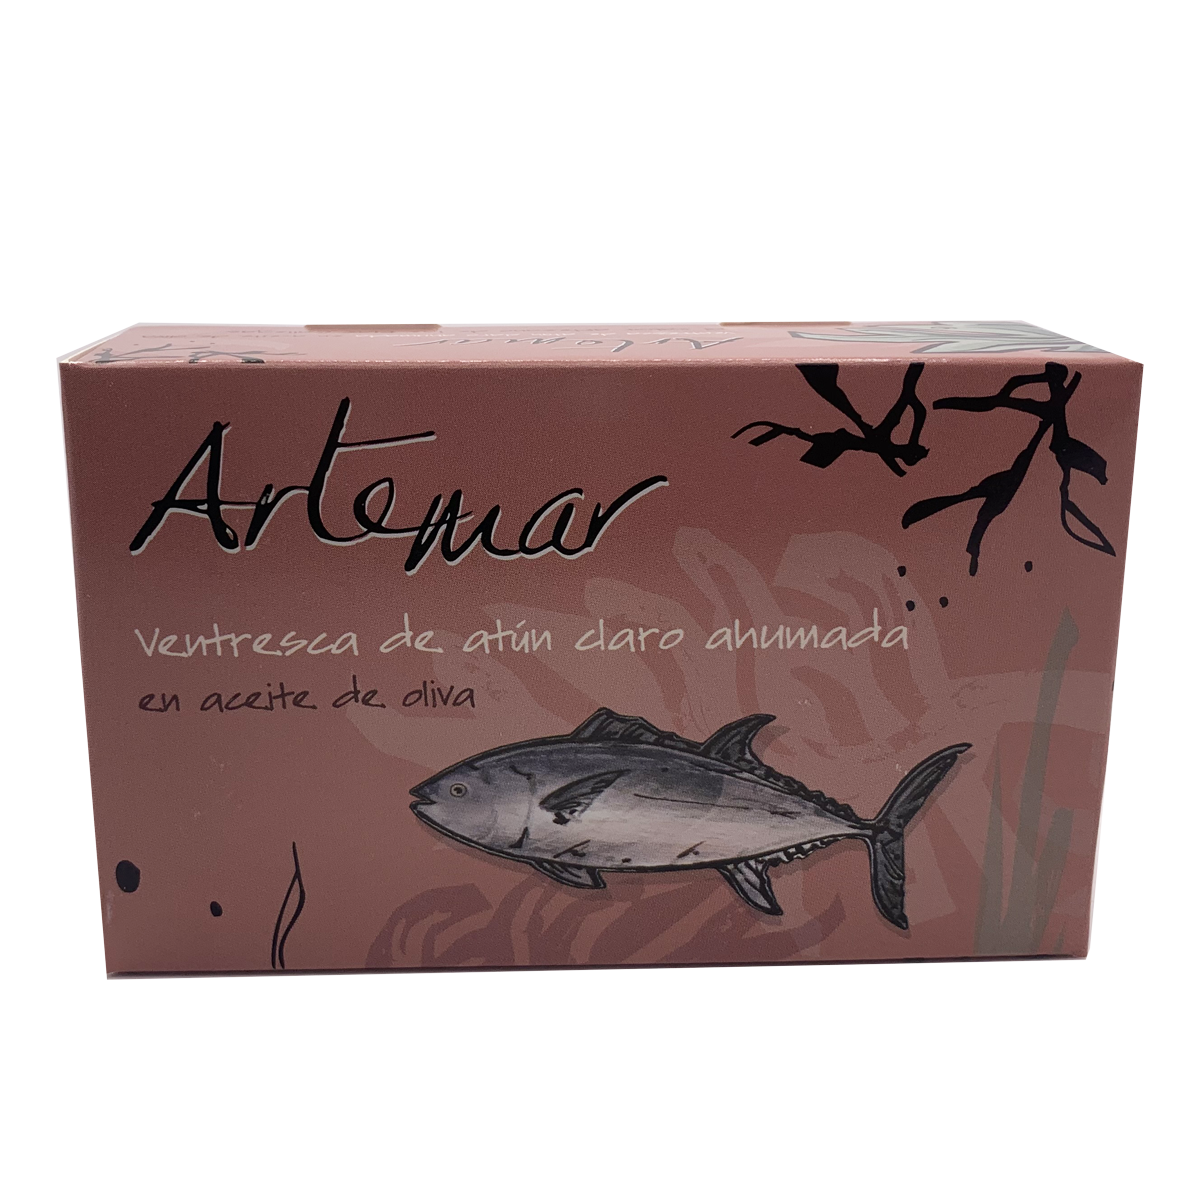 Smoked tuna belly, Artemar 115gr